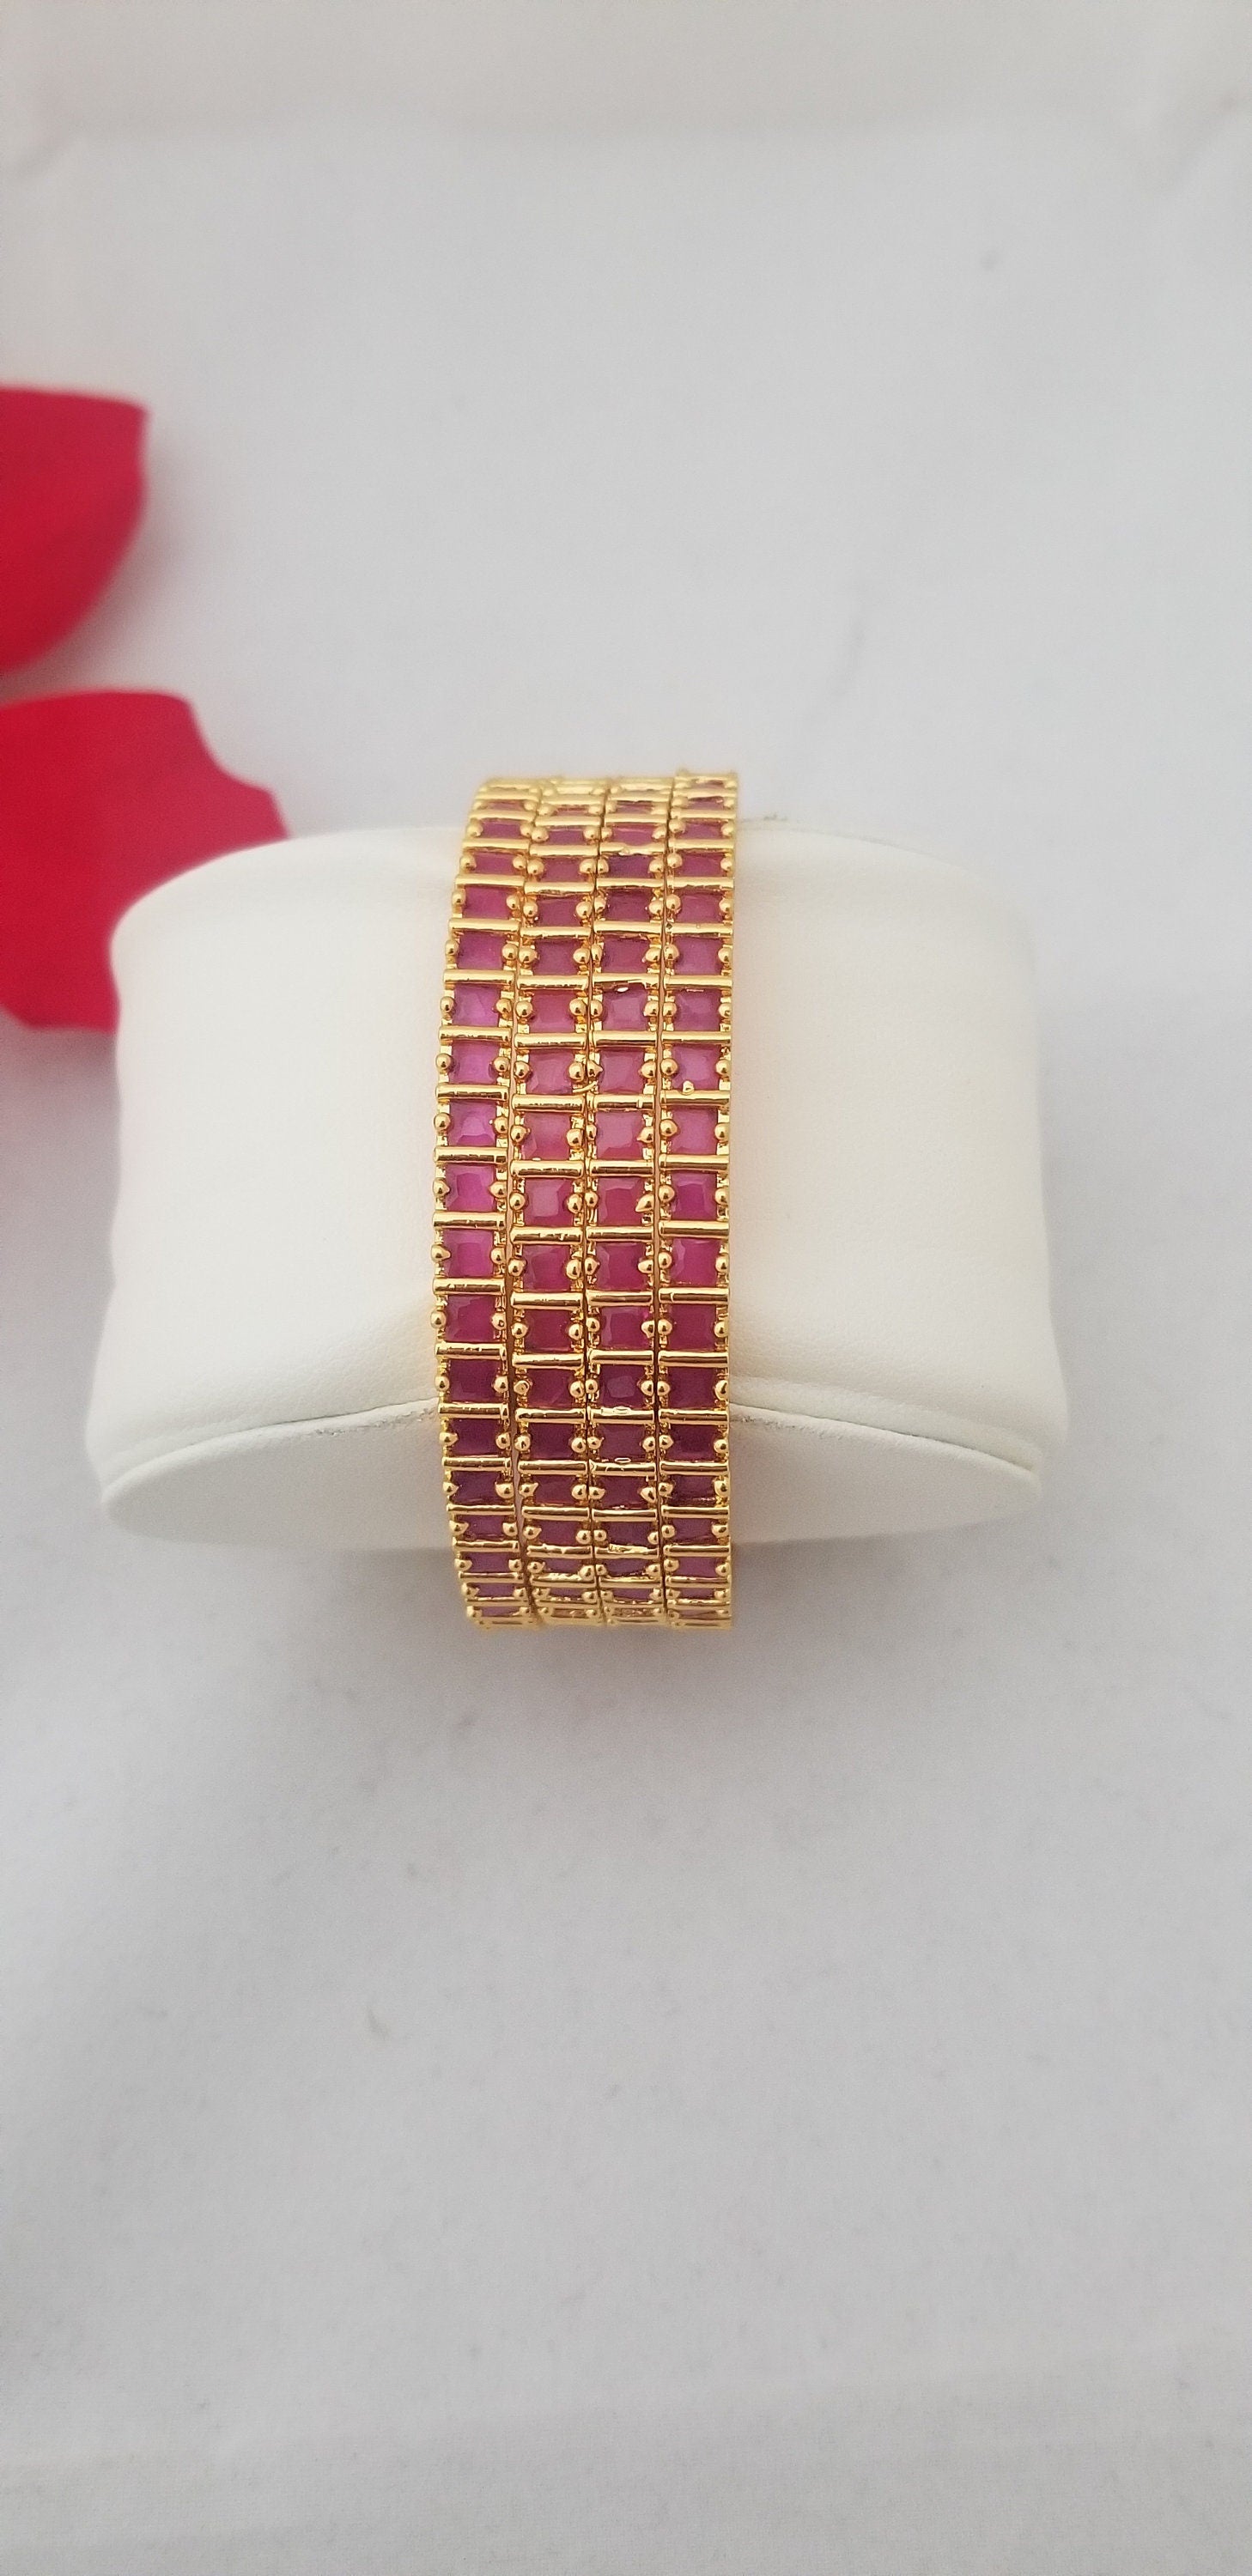 Premium Quality Gold finish AD Pink stone Bangles - Set of 4 bangles - Size 2.6